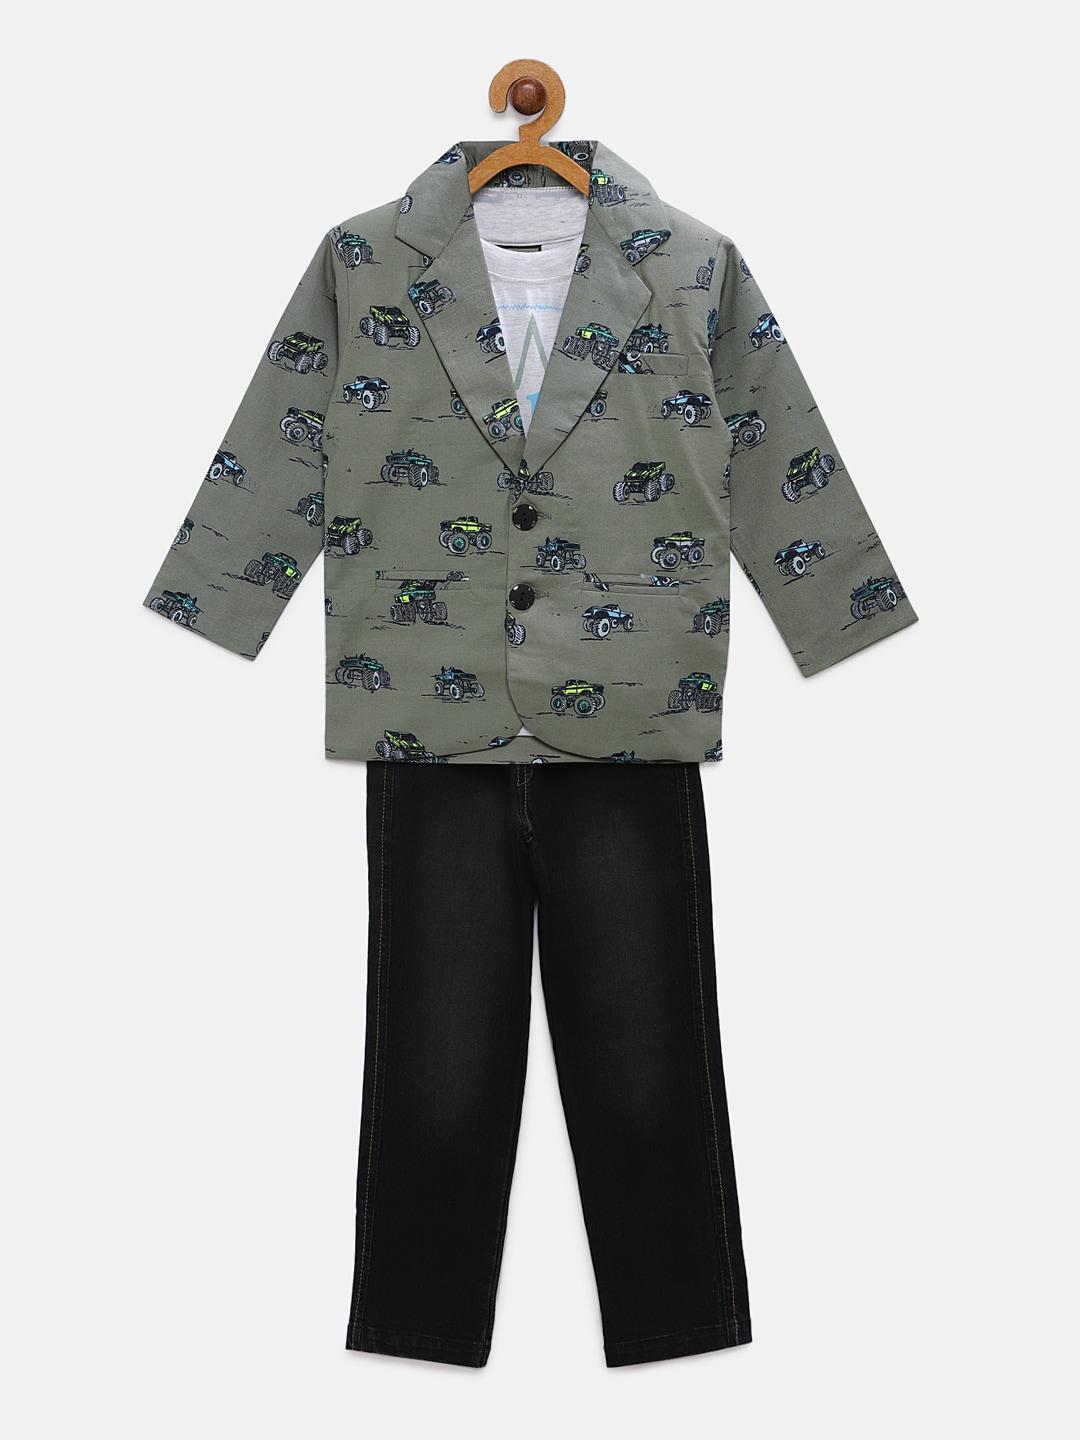 rikidoos boys green & grey clothing set